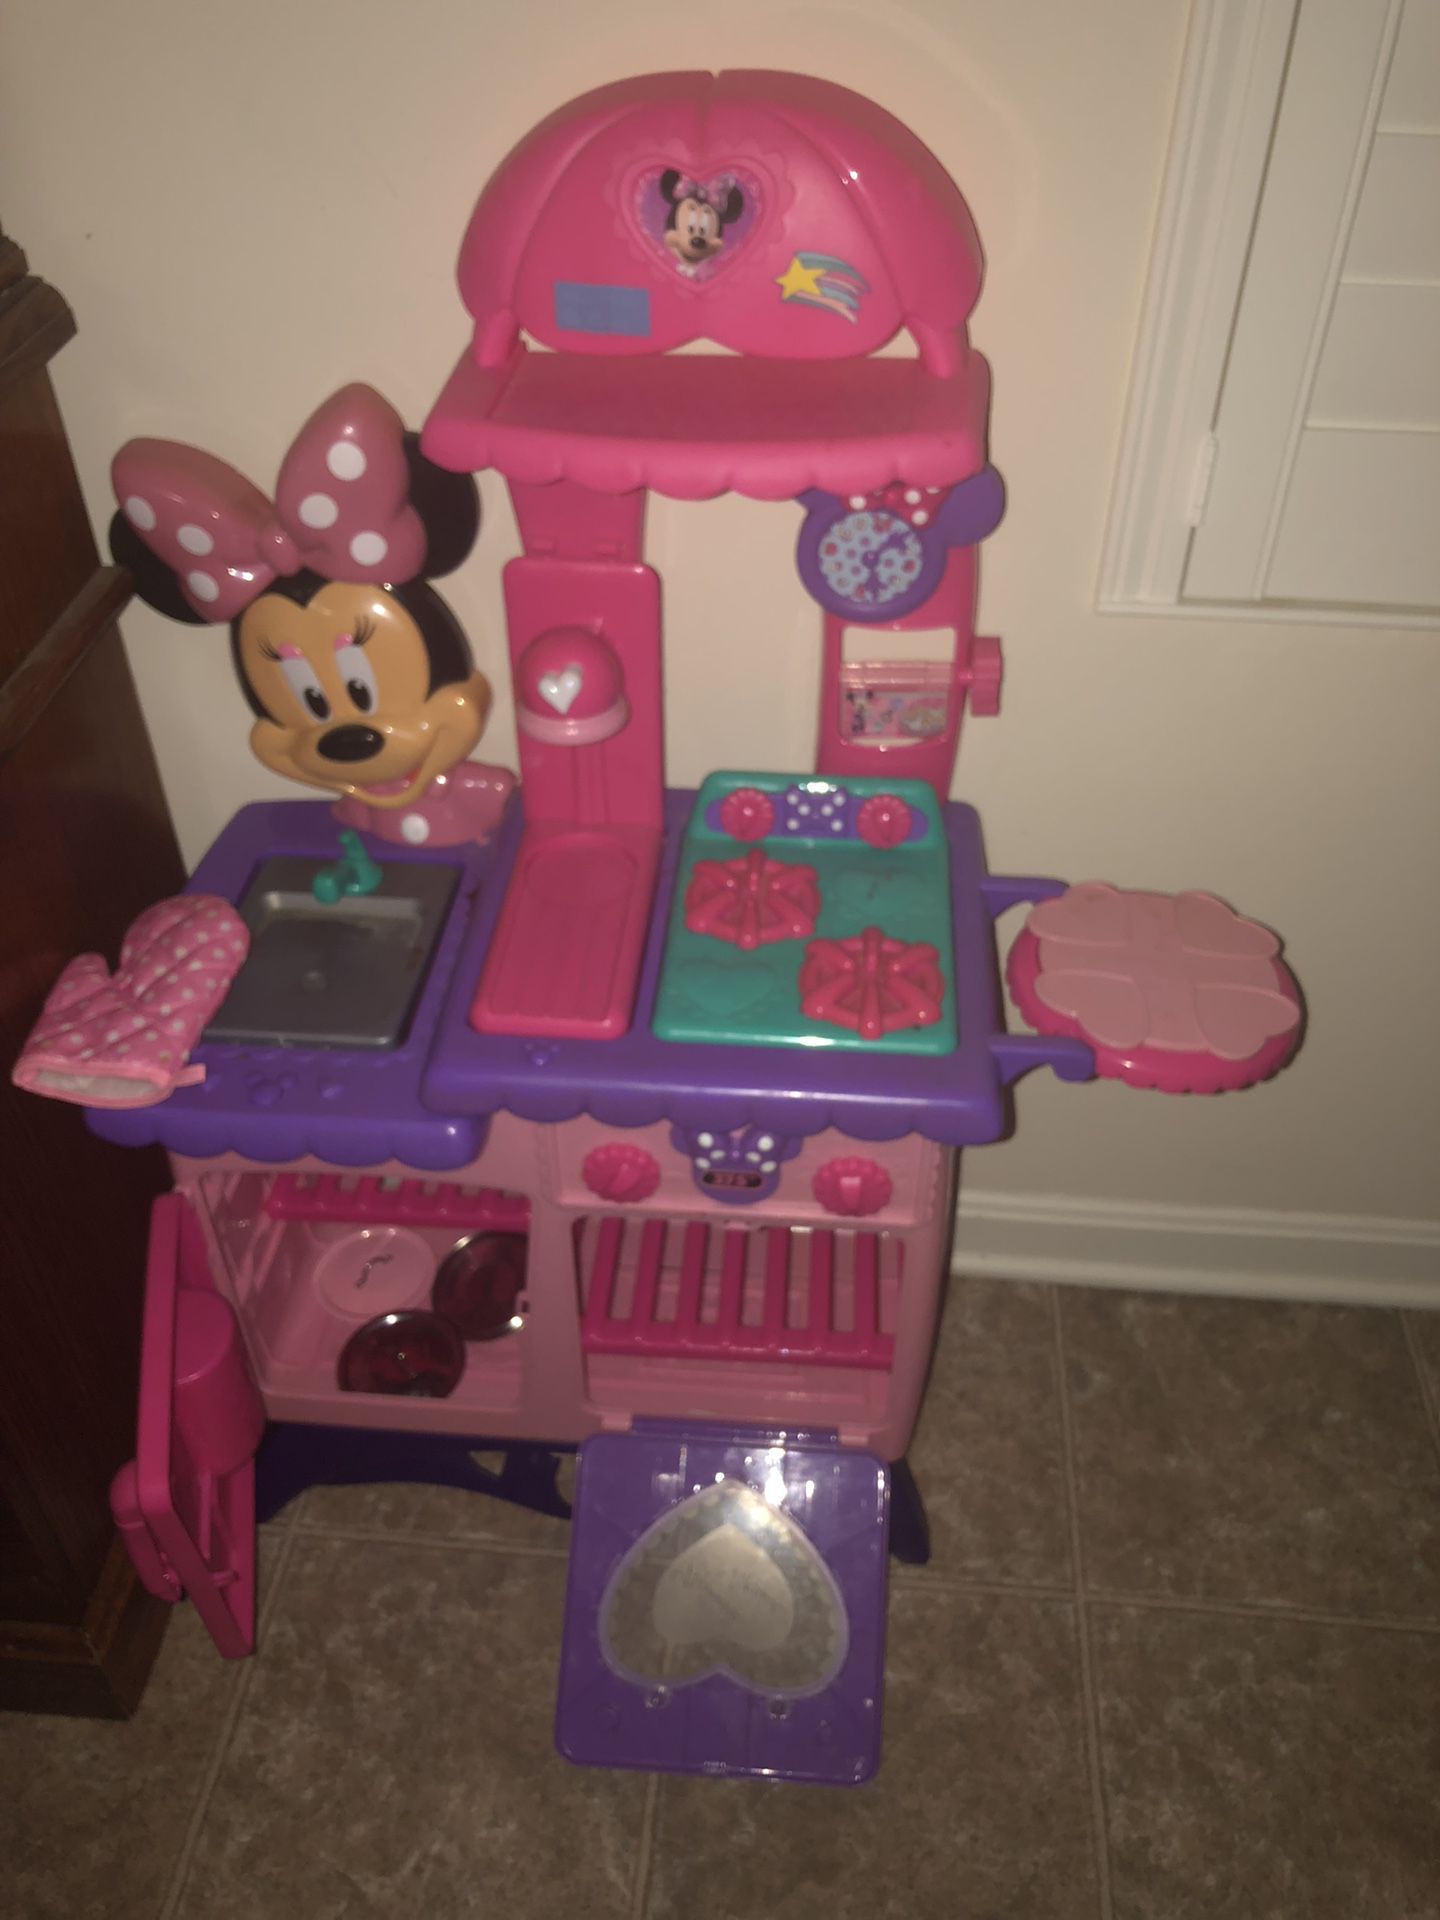 Minnie Mouse kitchen toy